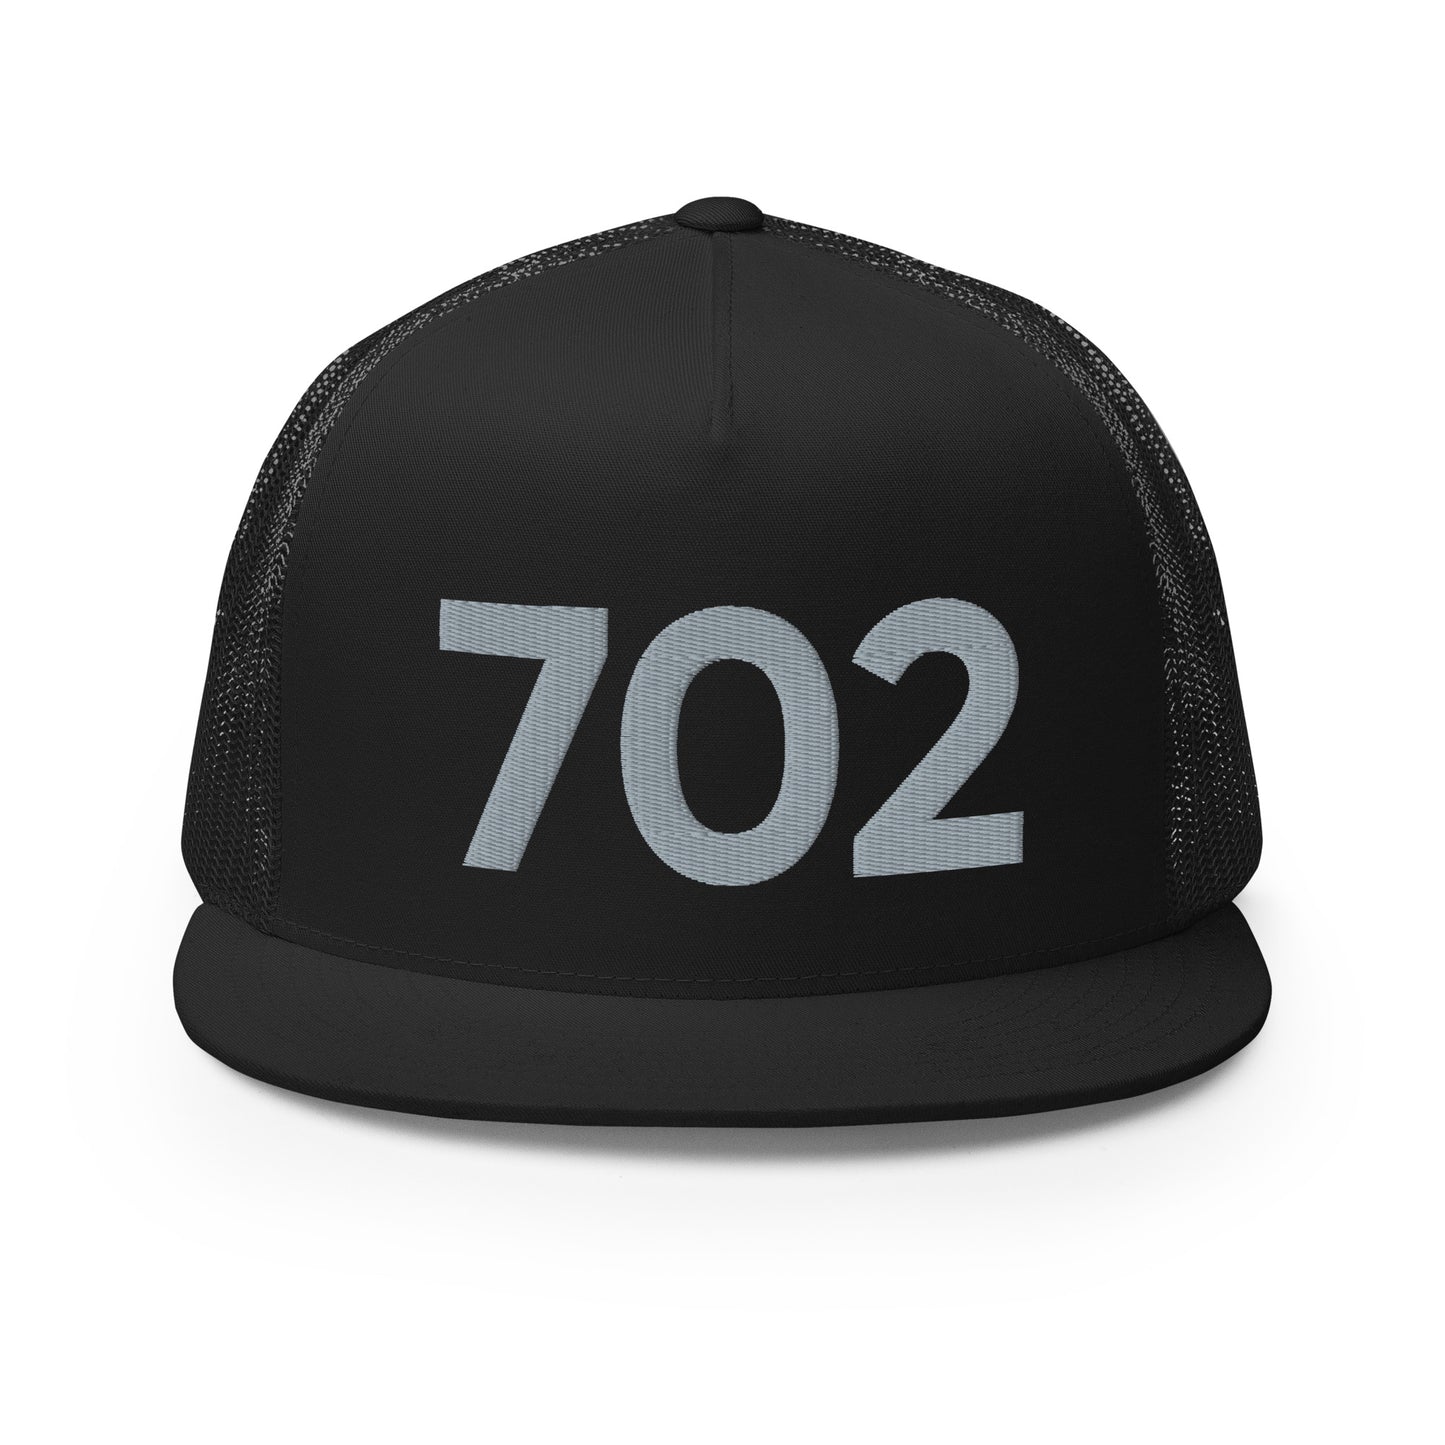 702 Las Vegas Strong Trucker Hat